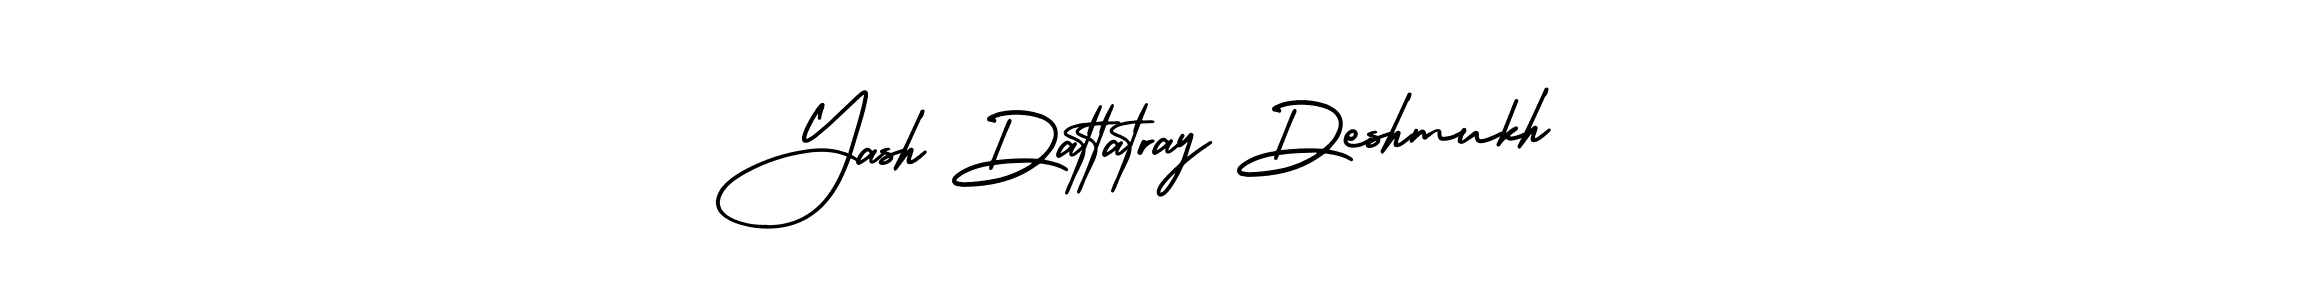 Best and Professional Signature Style for Yash Dattatray Deshmukh. AmerikaSignatureDemo-Regular Best Signature Style Collection. Yash Dattatray Deshmukh signature style 3 images and pictures png